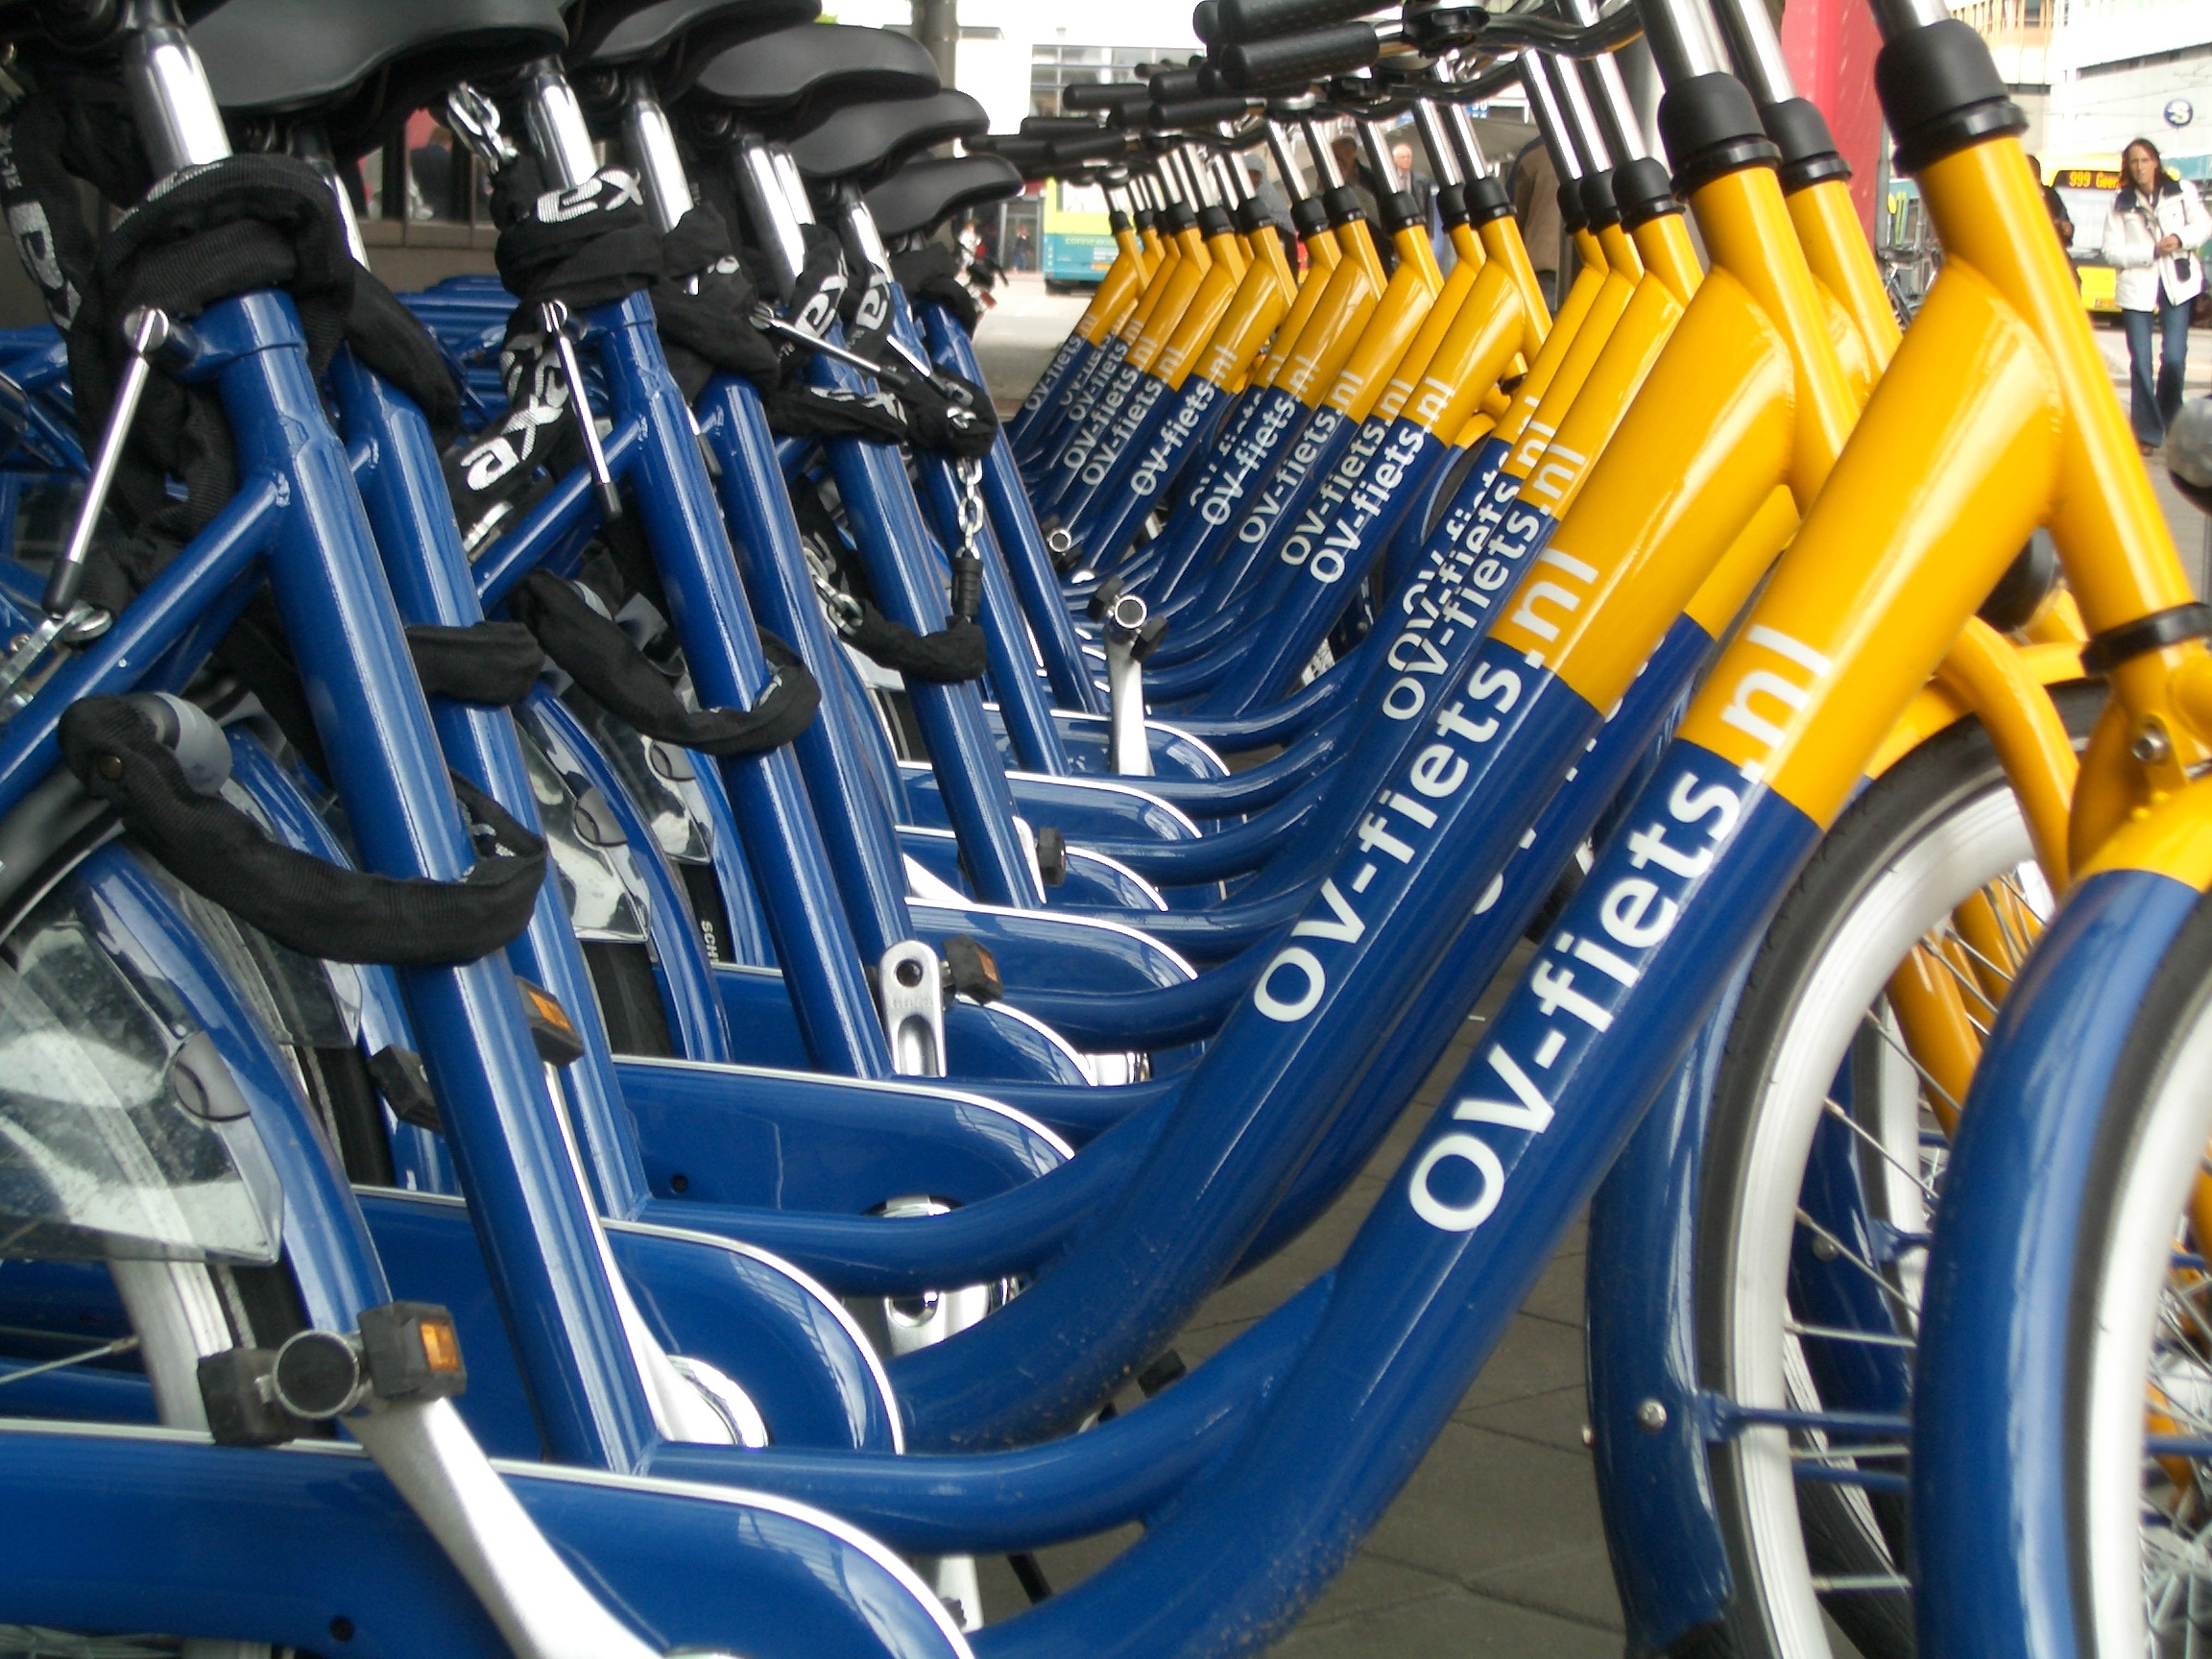 Station Europapark krijgt twintig OV-fietsen